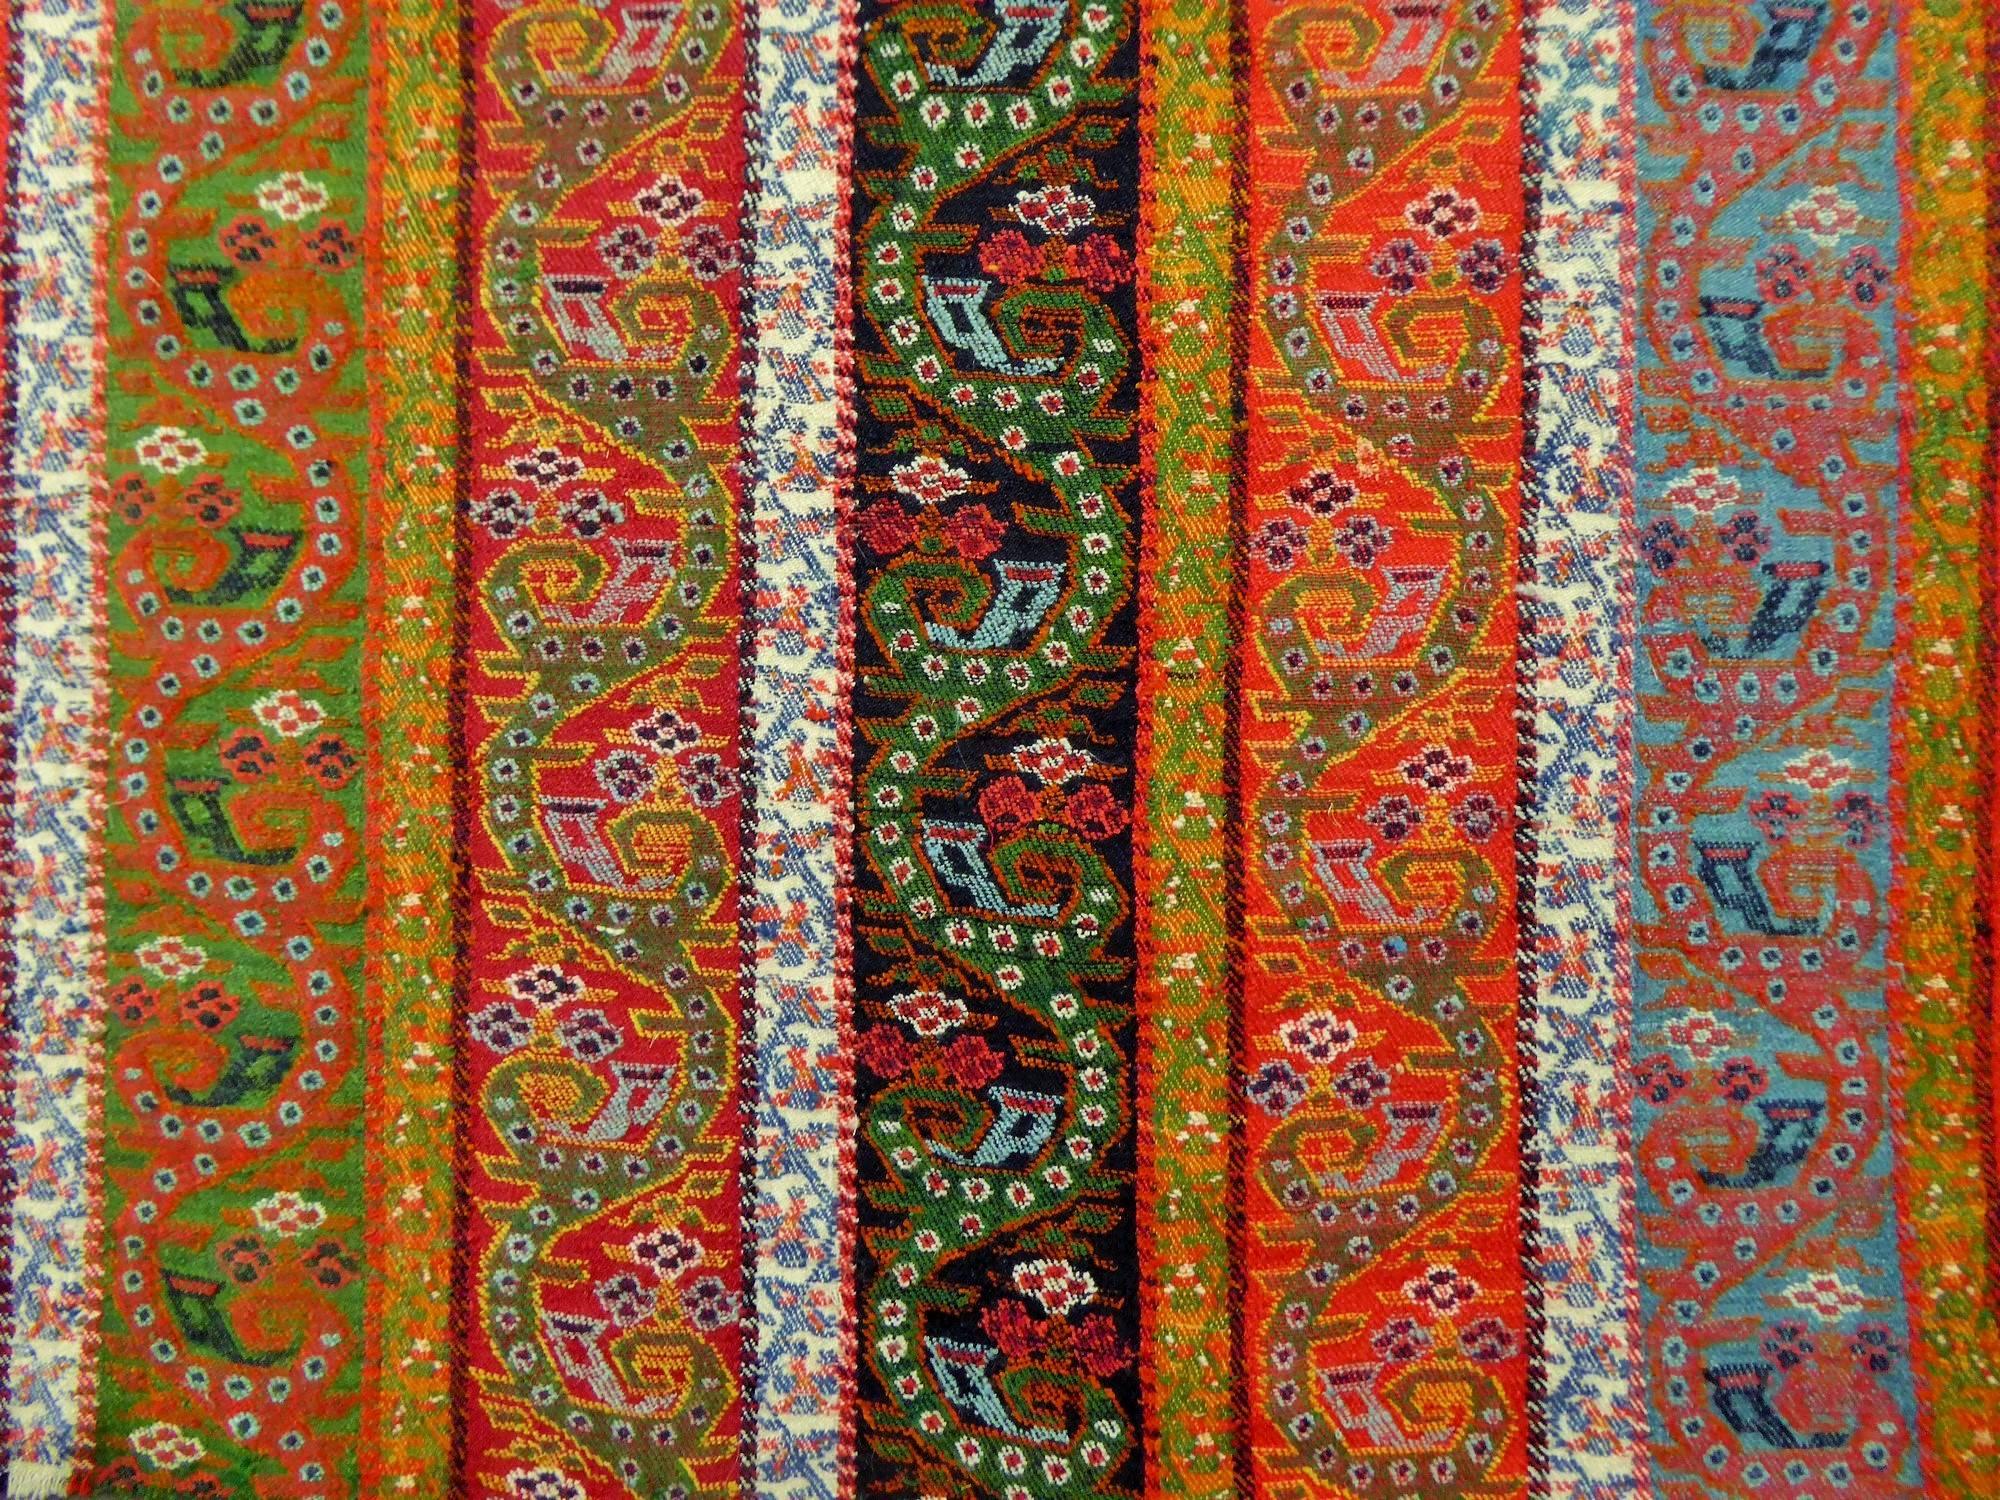 Twill weave striped kashmir shawl  - India or Persia 19th century 1